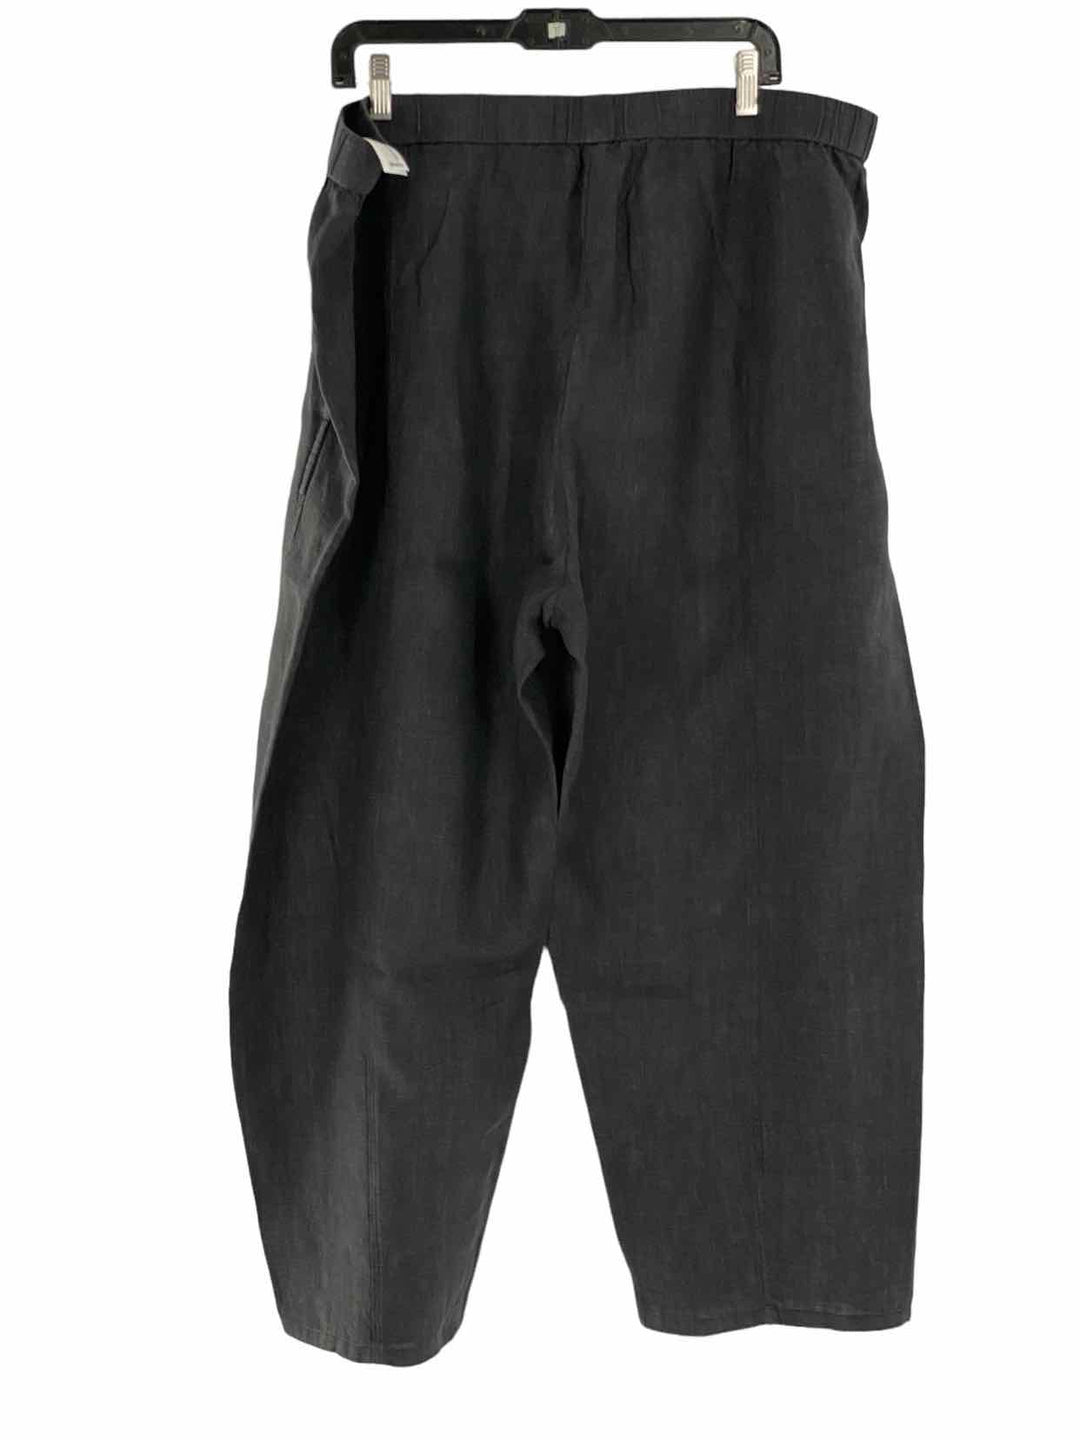 Eileen Fisher Size 2X Dark Gray NWT Pants